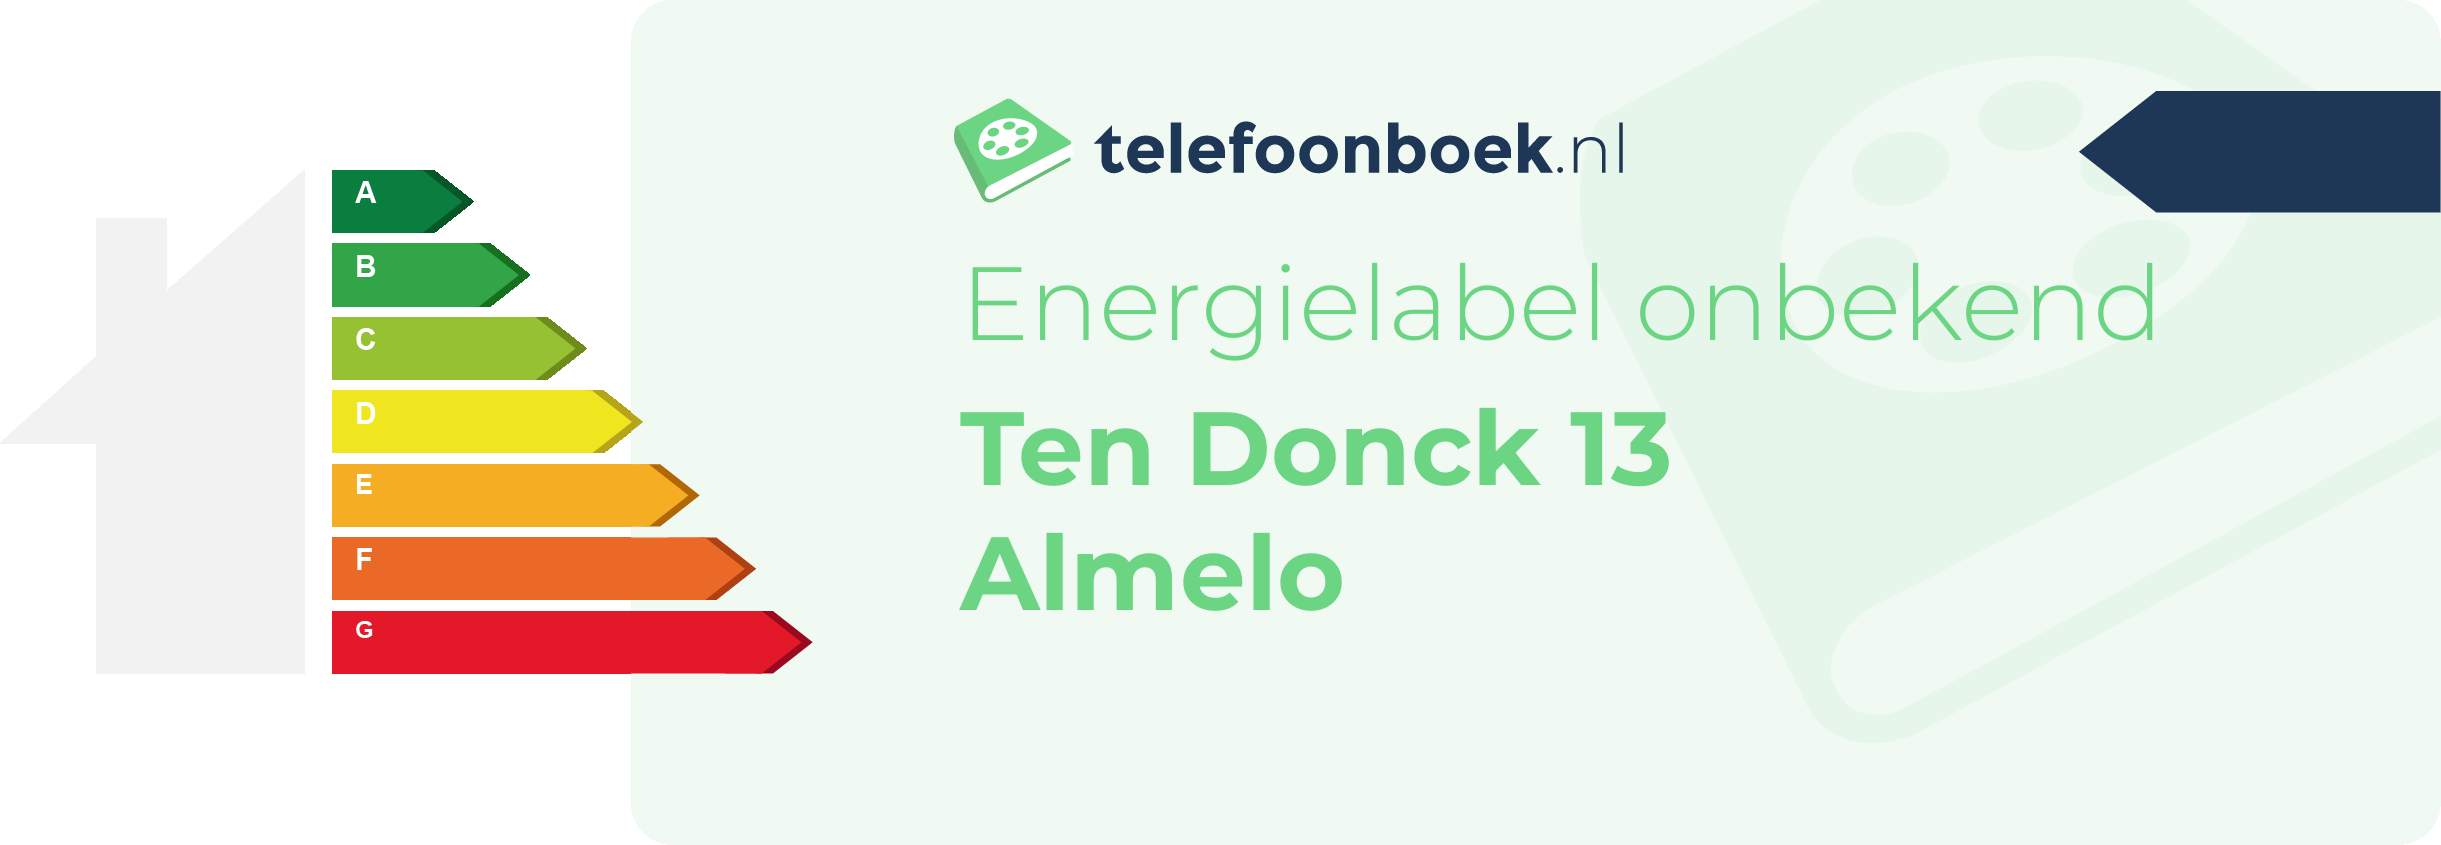 Energielabel Ten Donck 13 Almelo